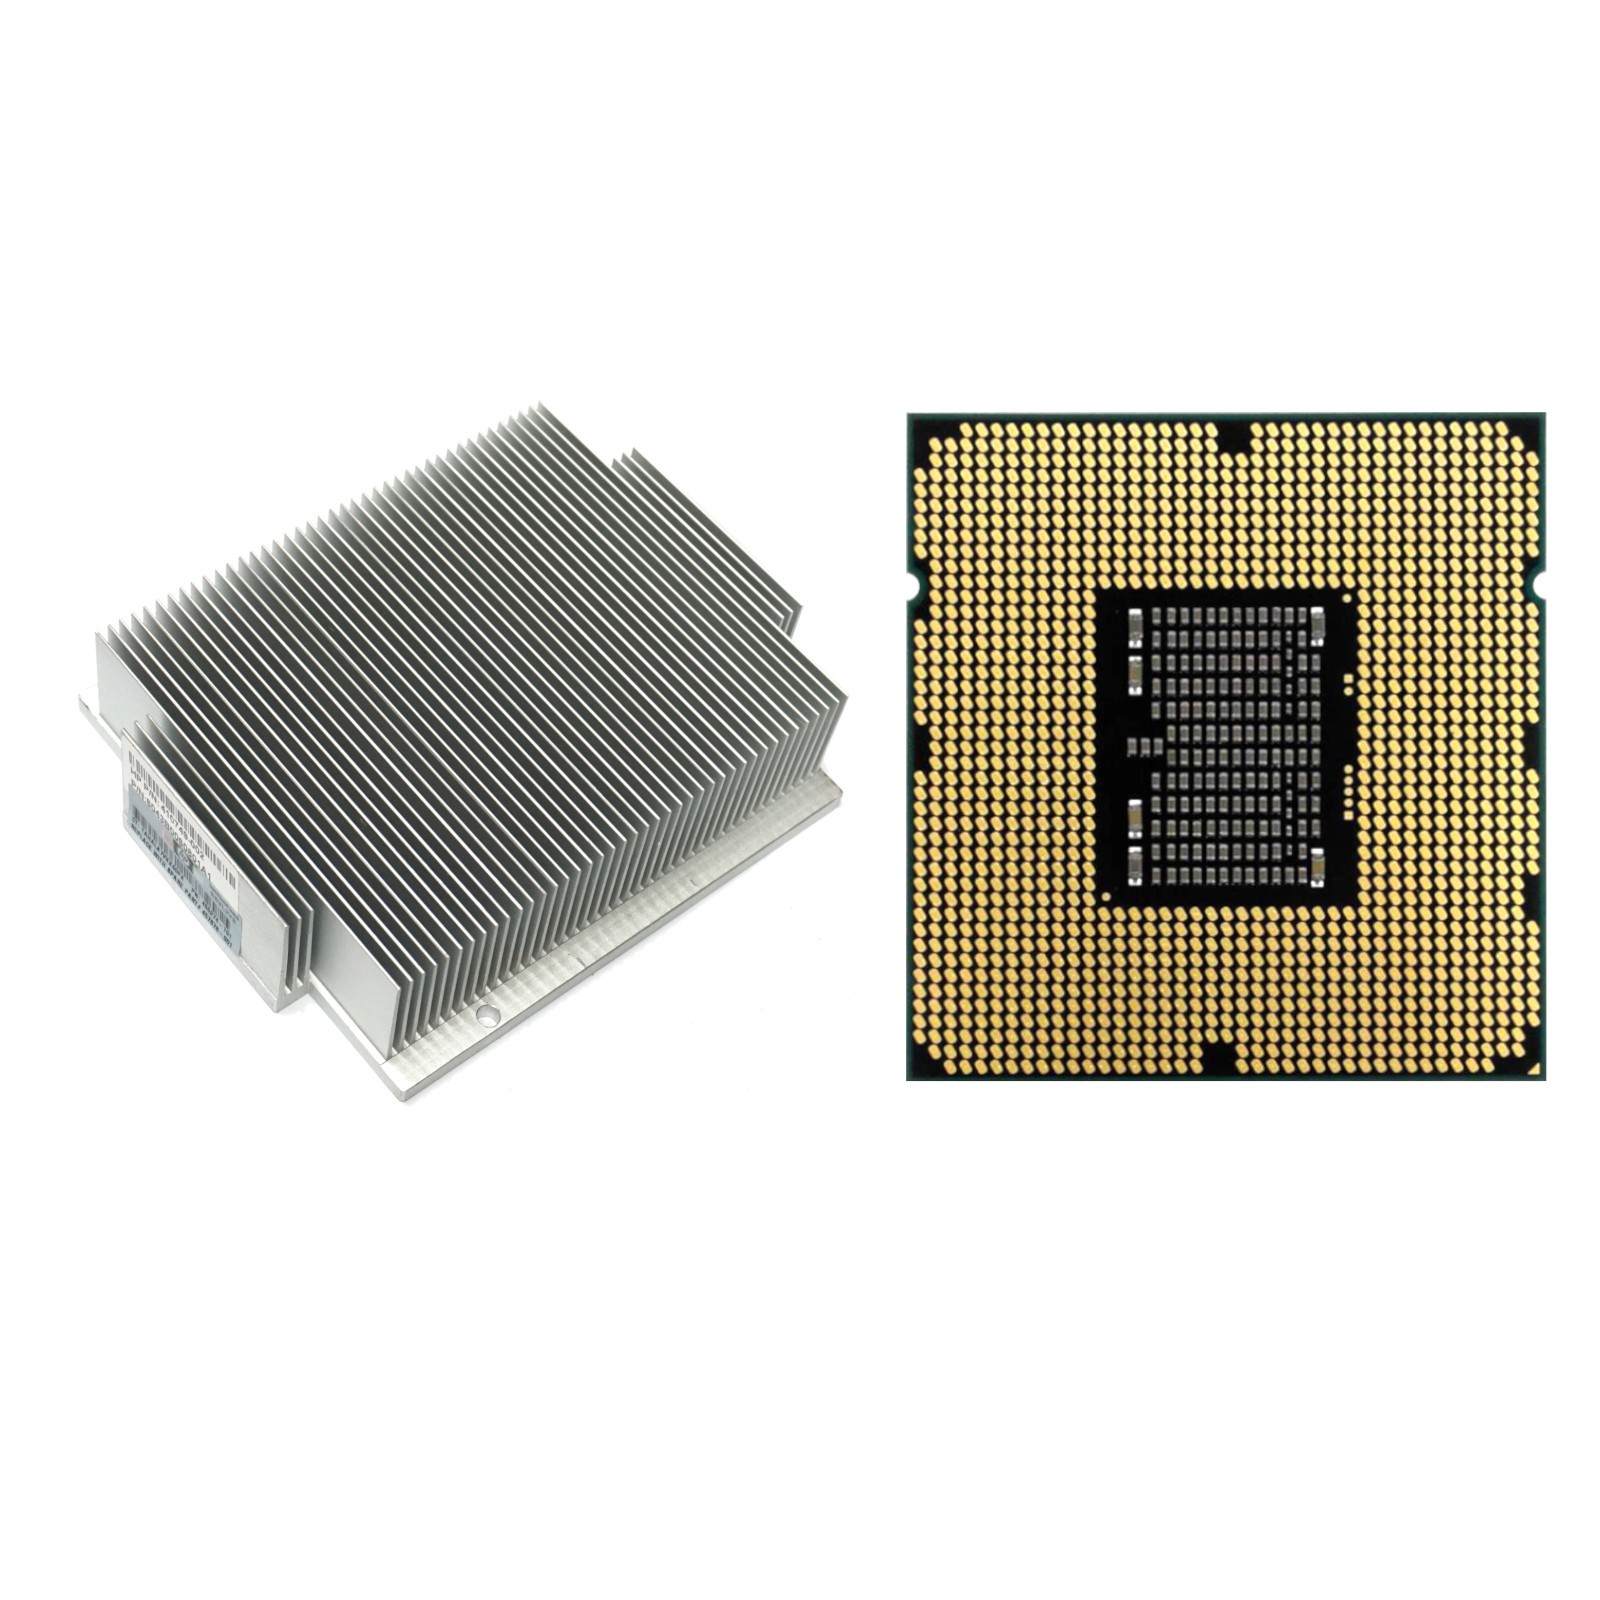 HP (435952-B21) ProLiant DL360 G5 - Intel Xeon E5335 CPU2 Kit